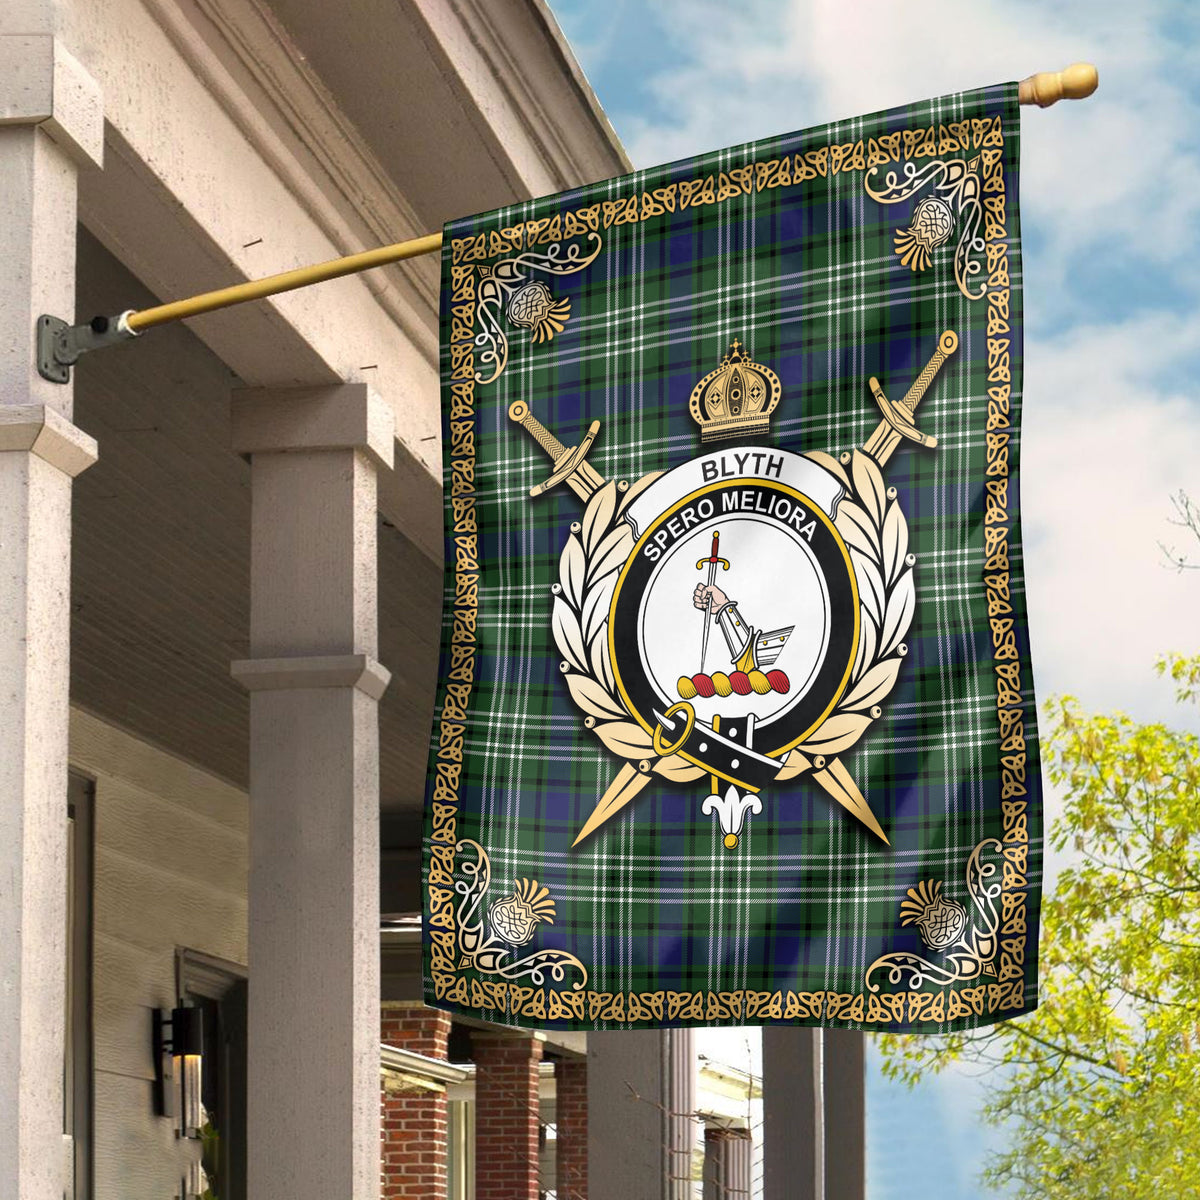 Blyth Tartan Crest Garden Flag - Celtic Thistle Style